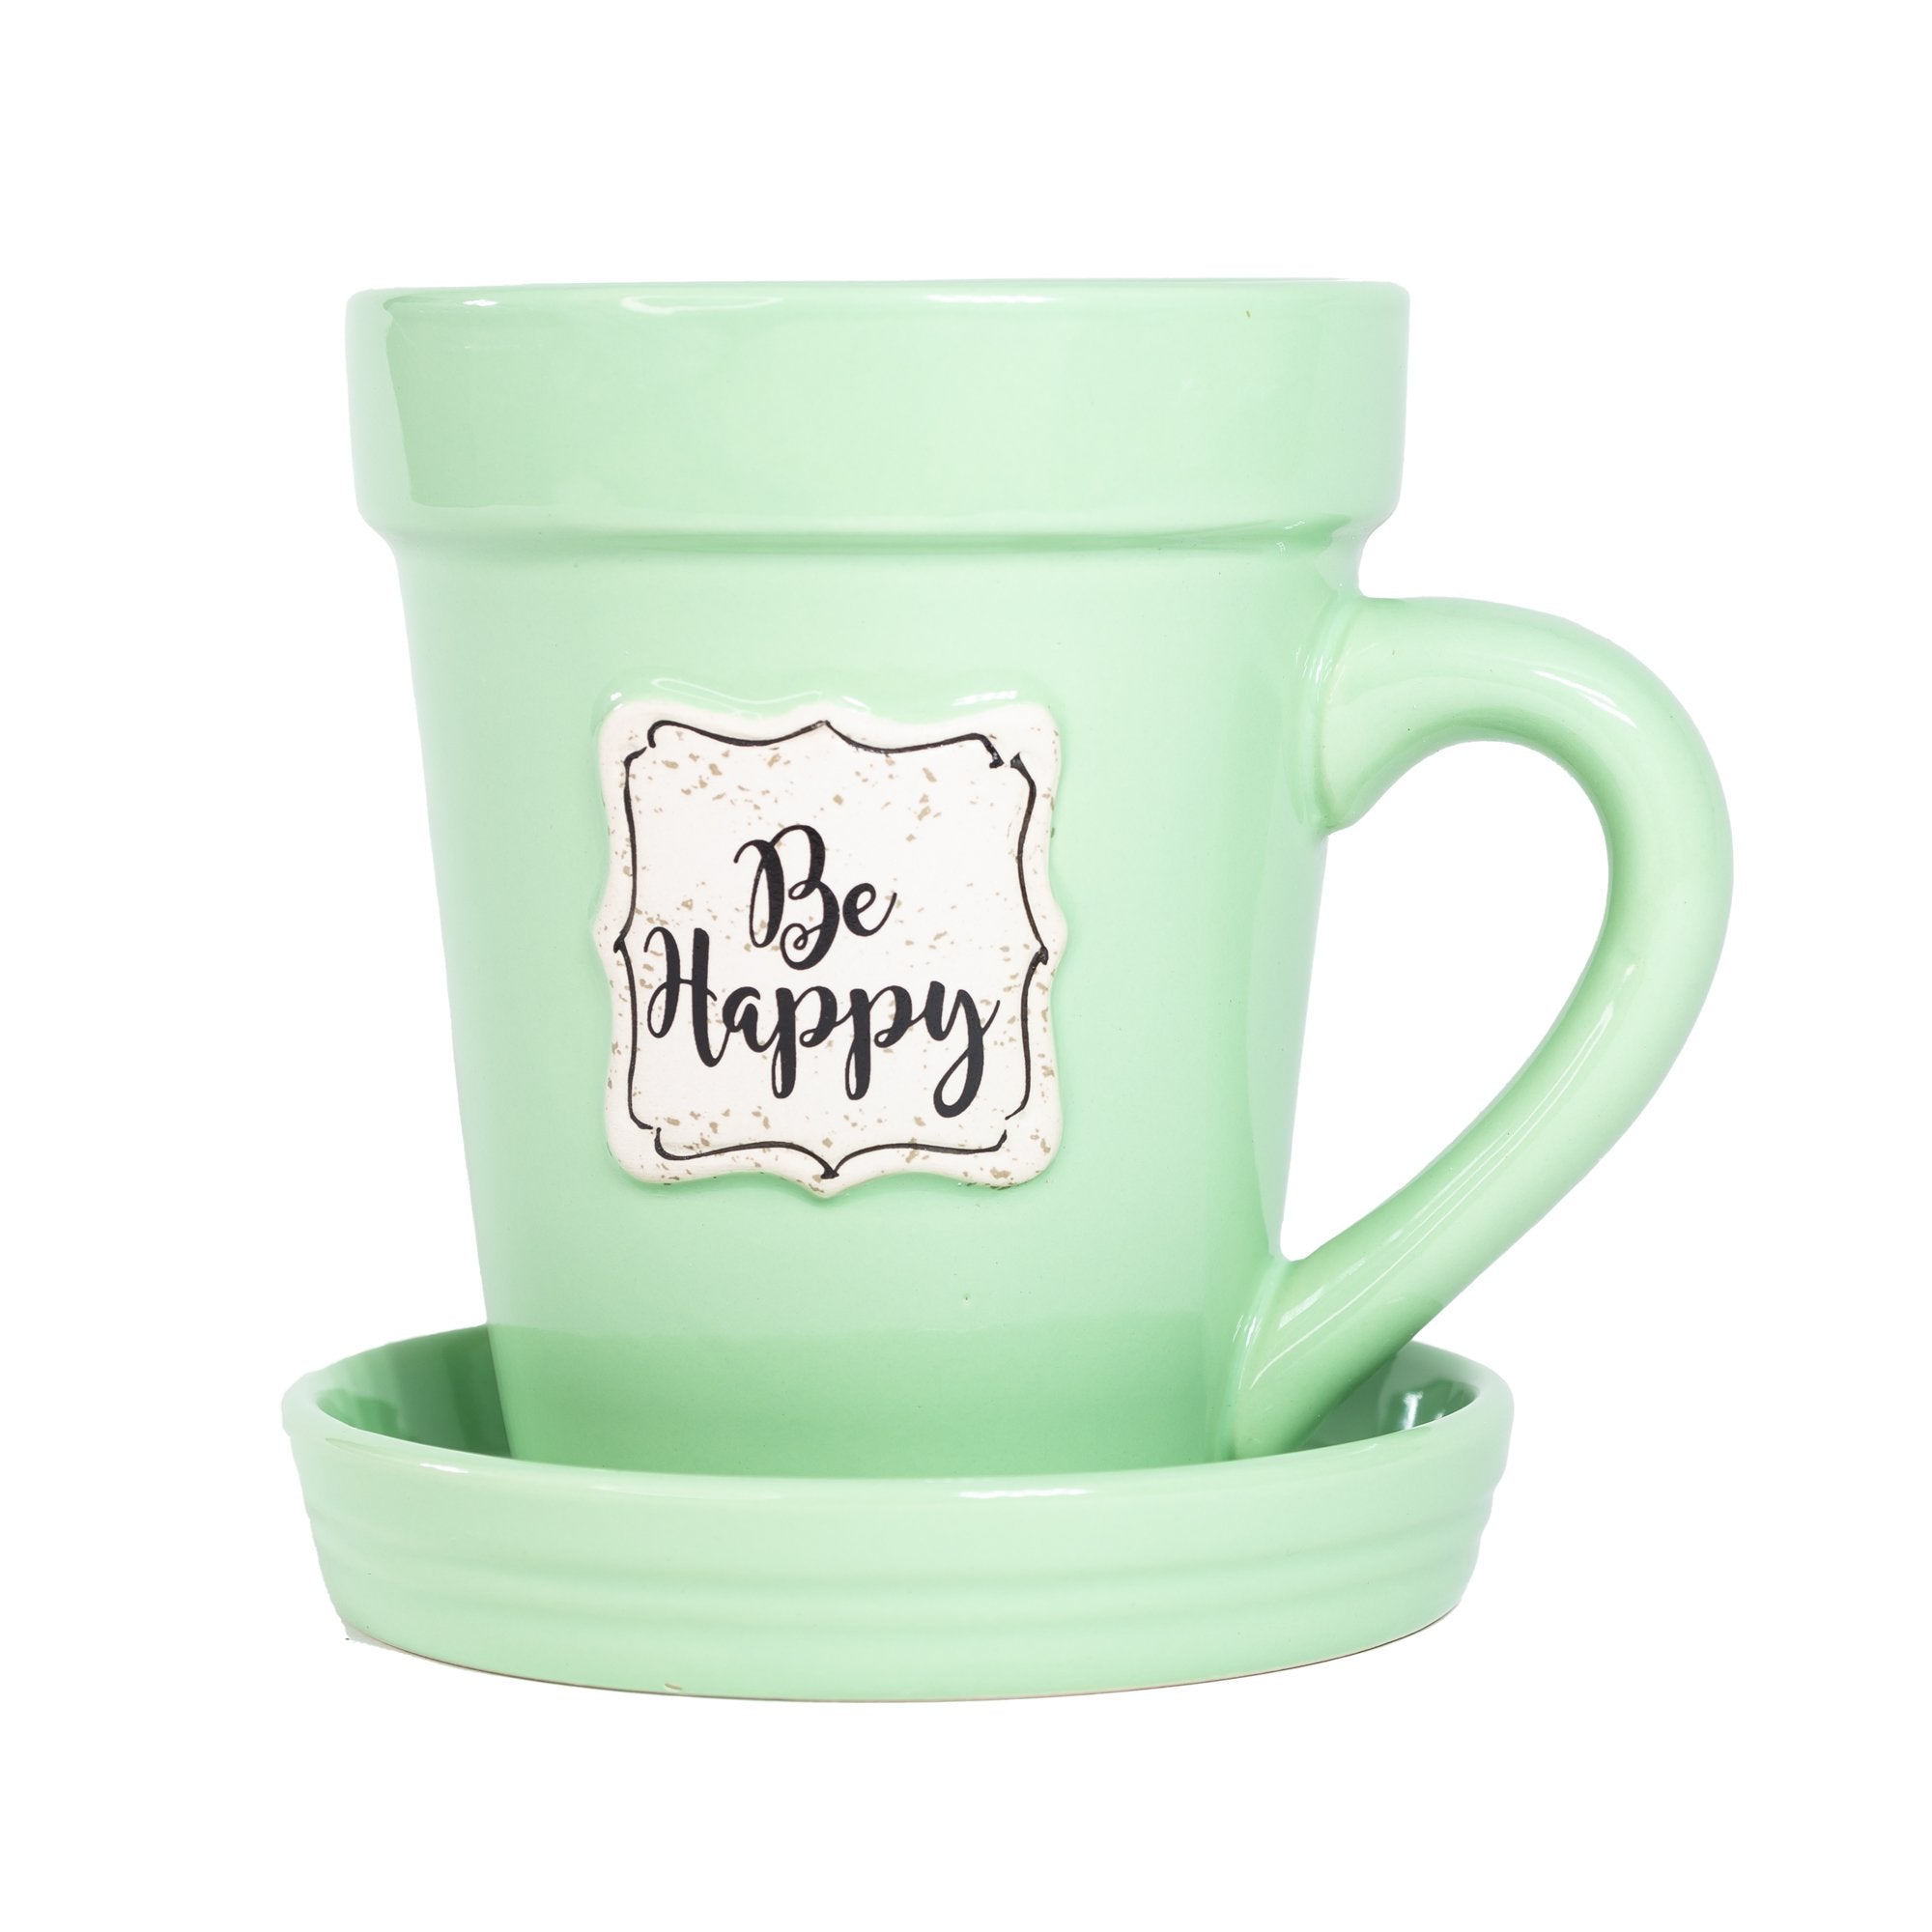 Green Flower Pot Mug w/Scripture - "Be Happy"